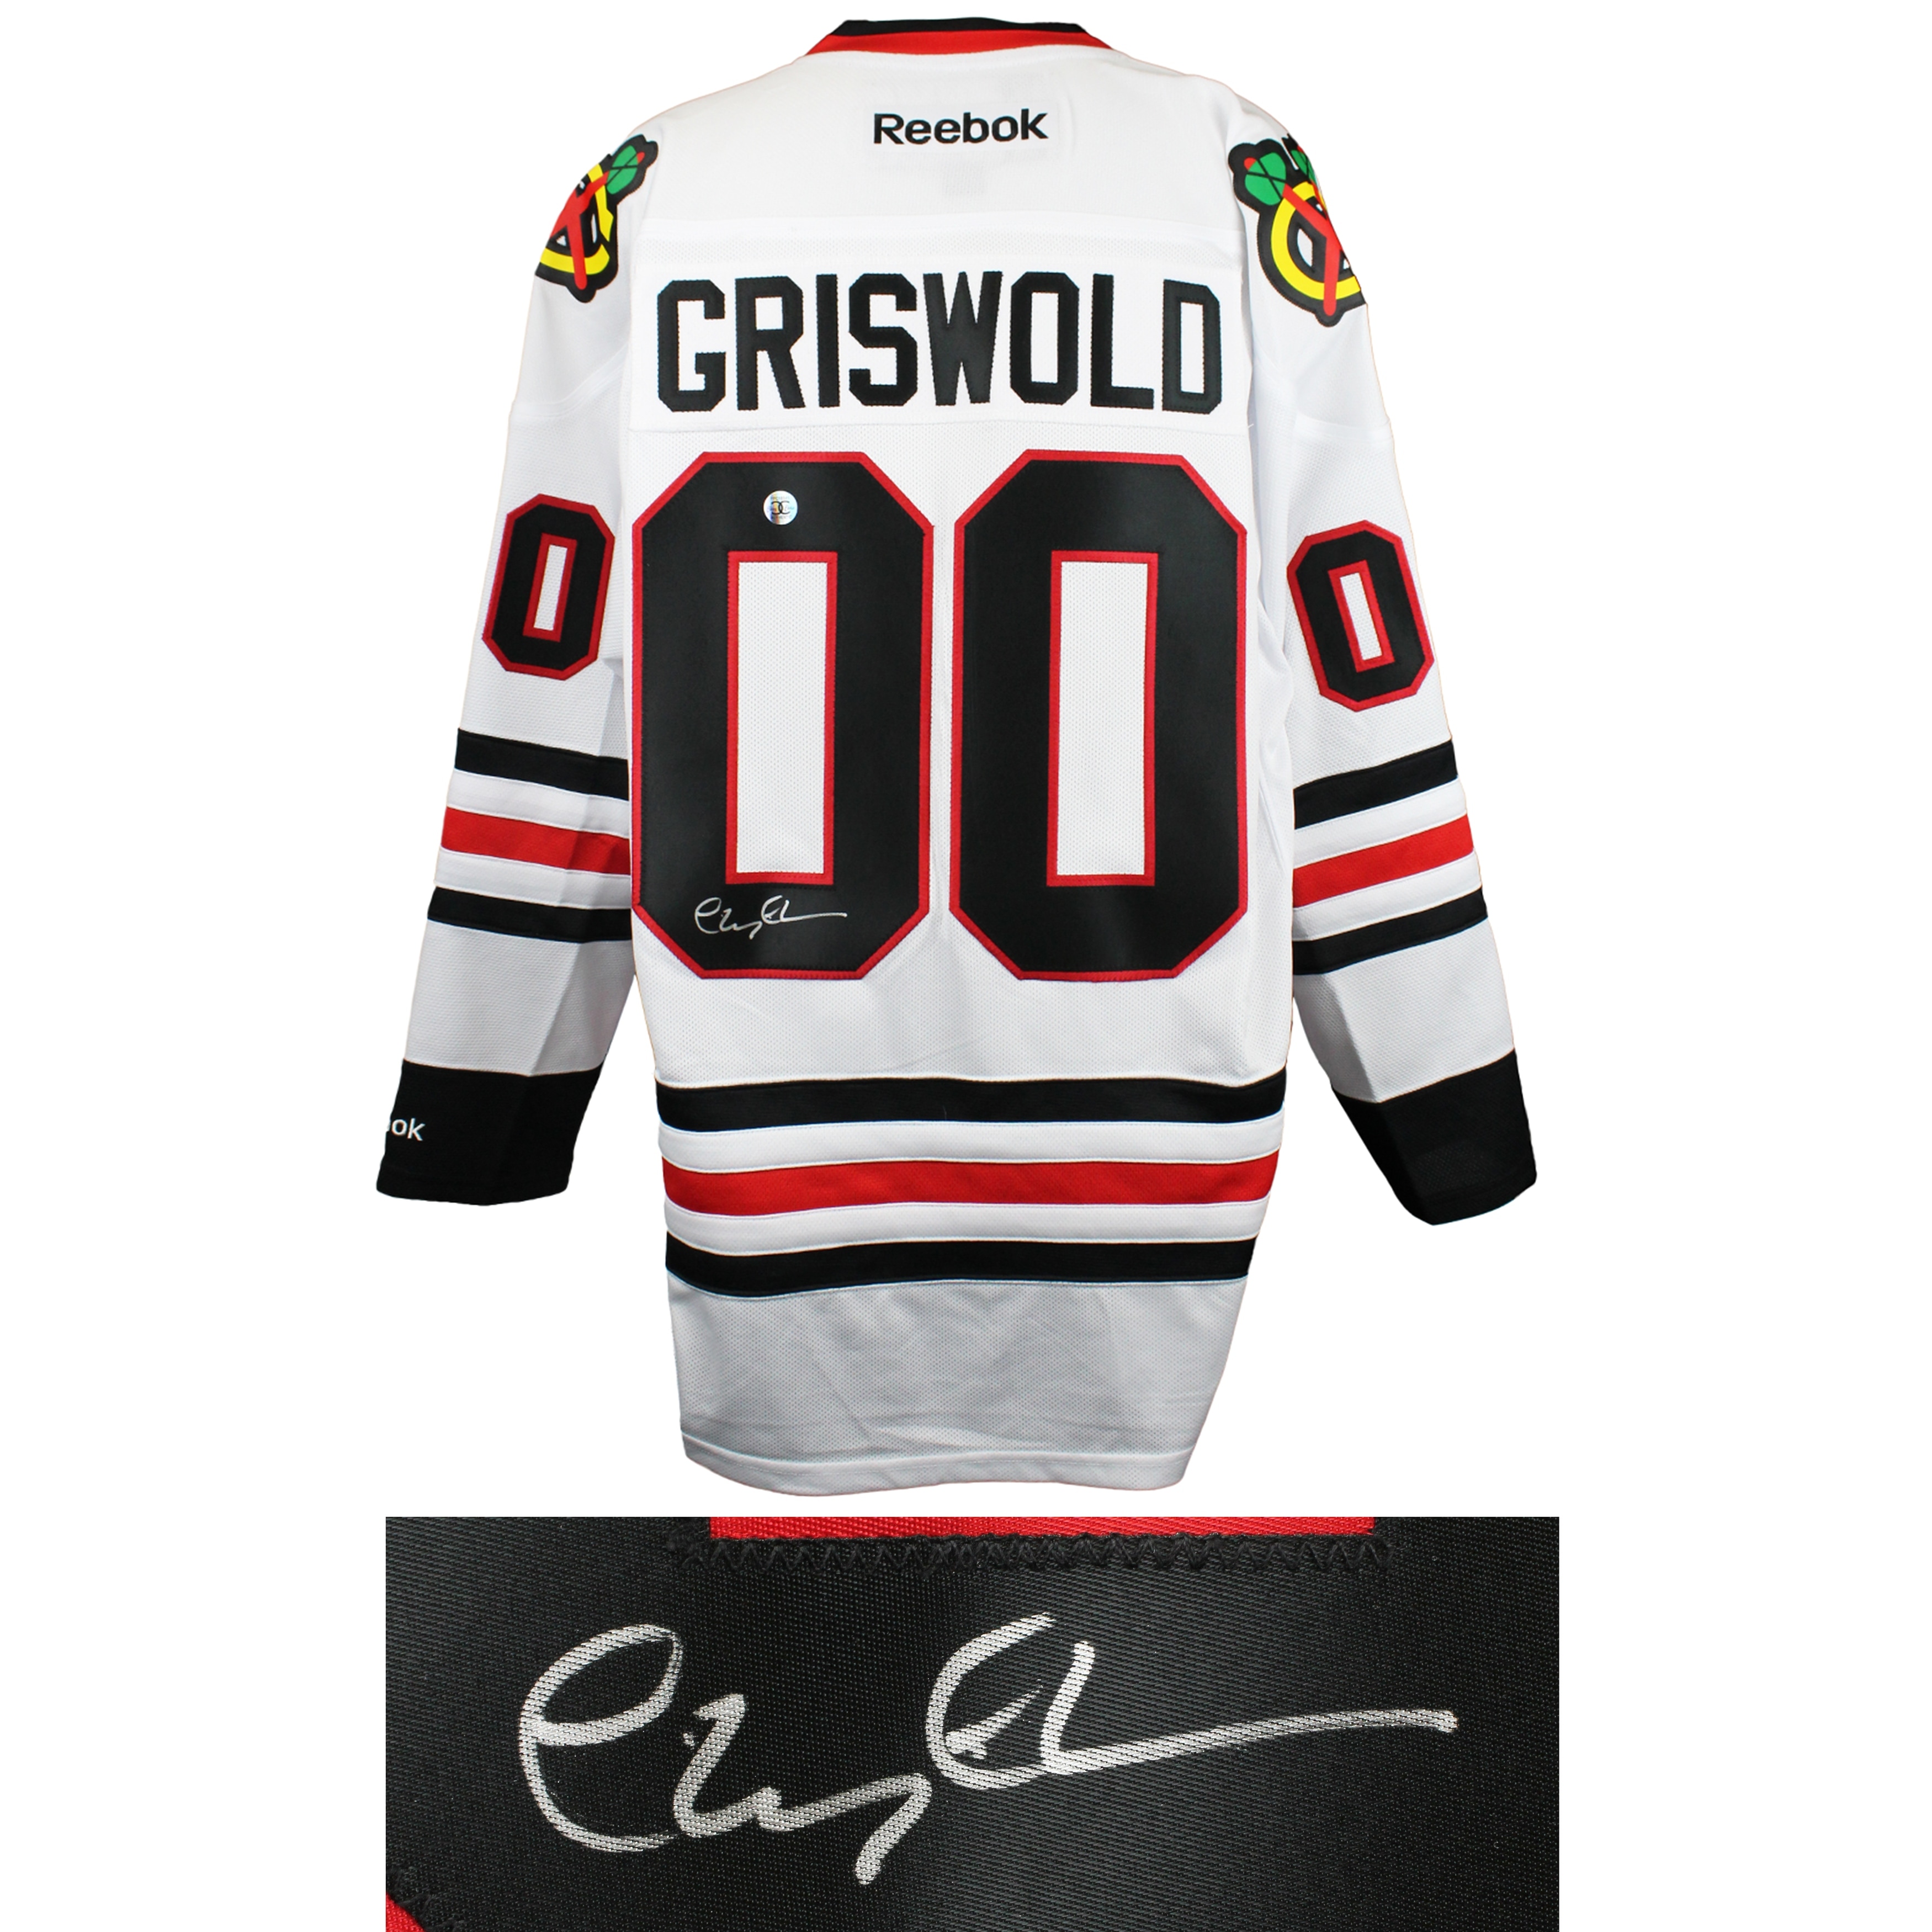 00 griswold blackhawks jersey